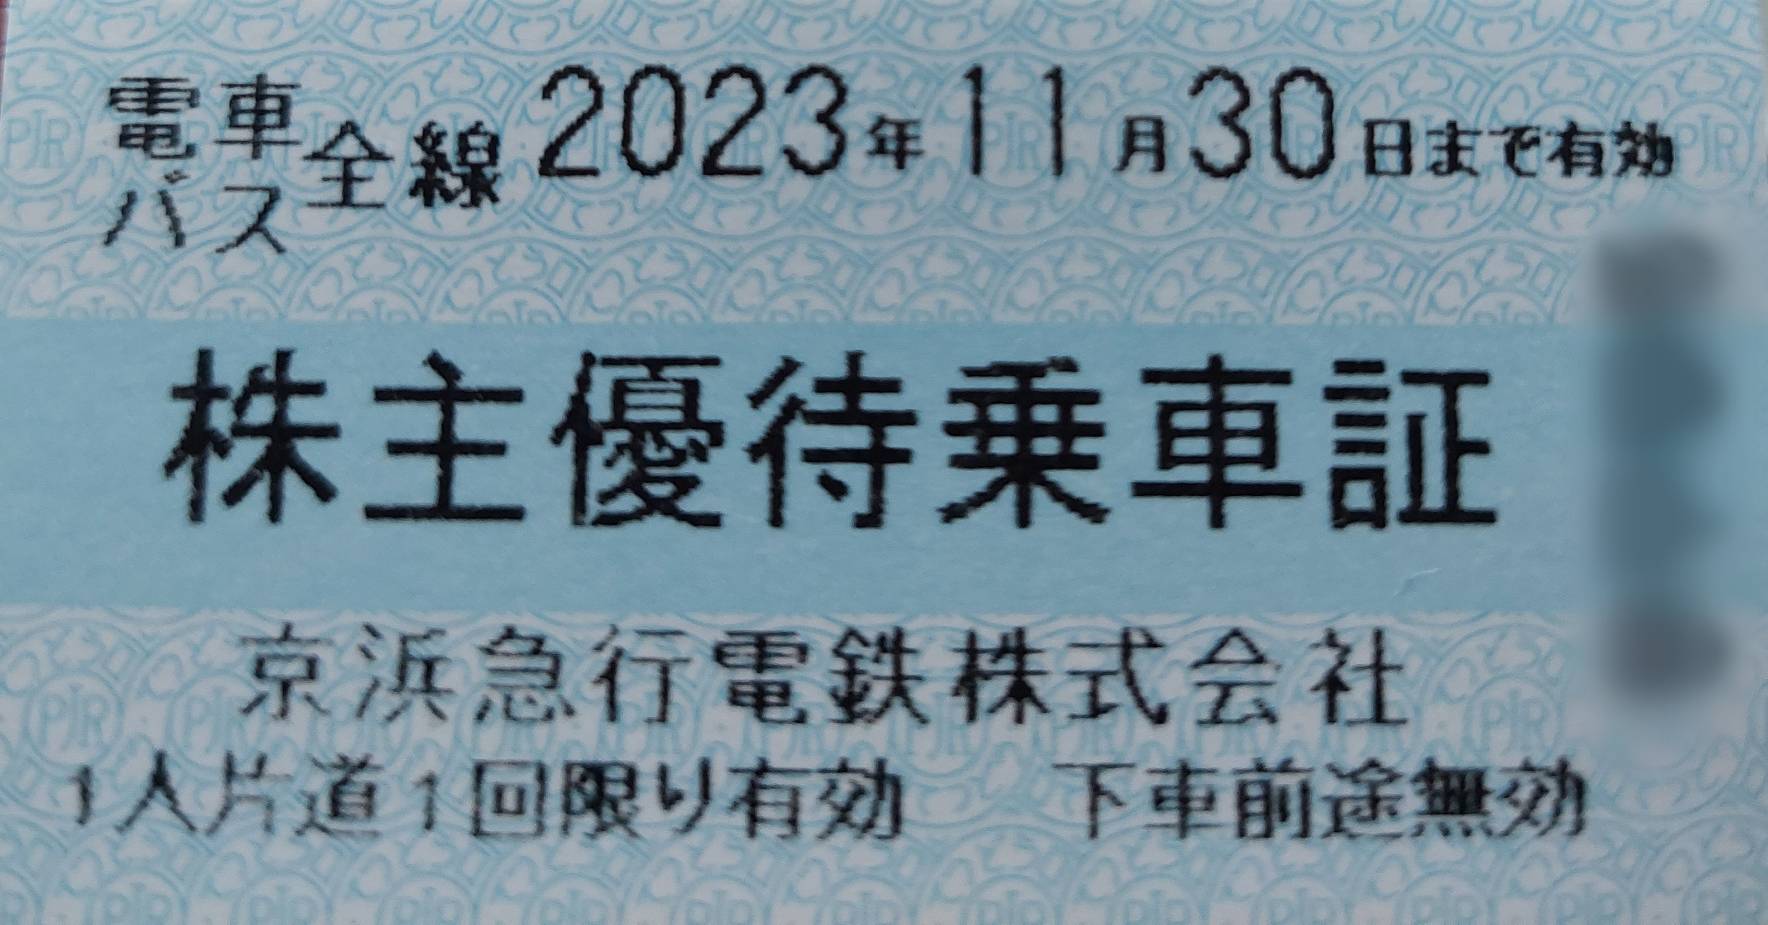 京王電鉄株主優待乗車券30枚 2023年11月30日まで有効